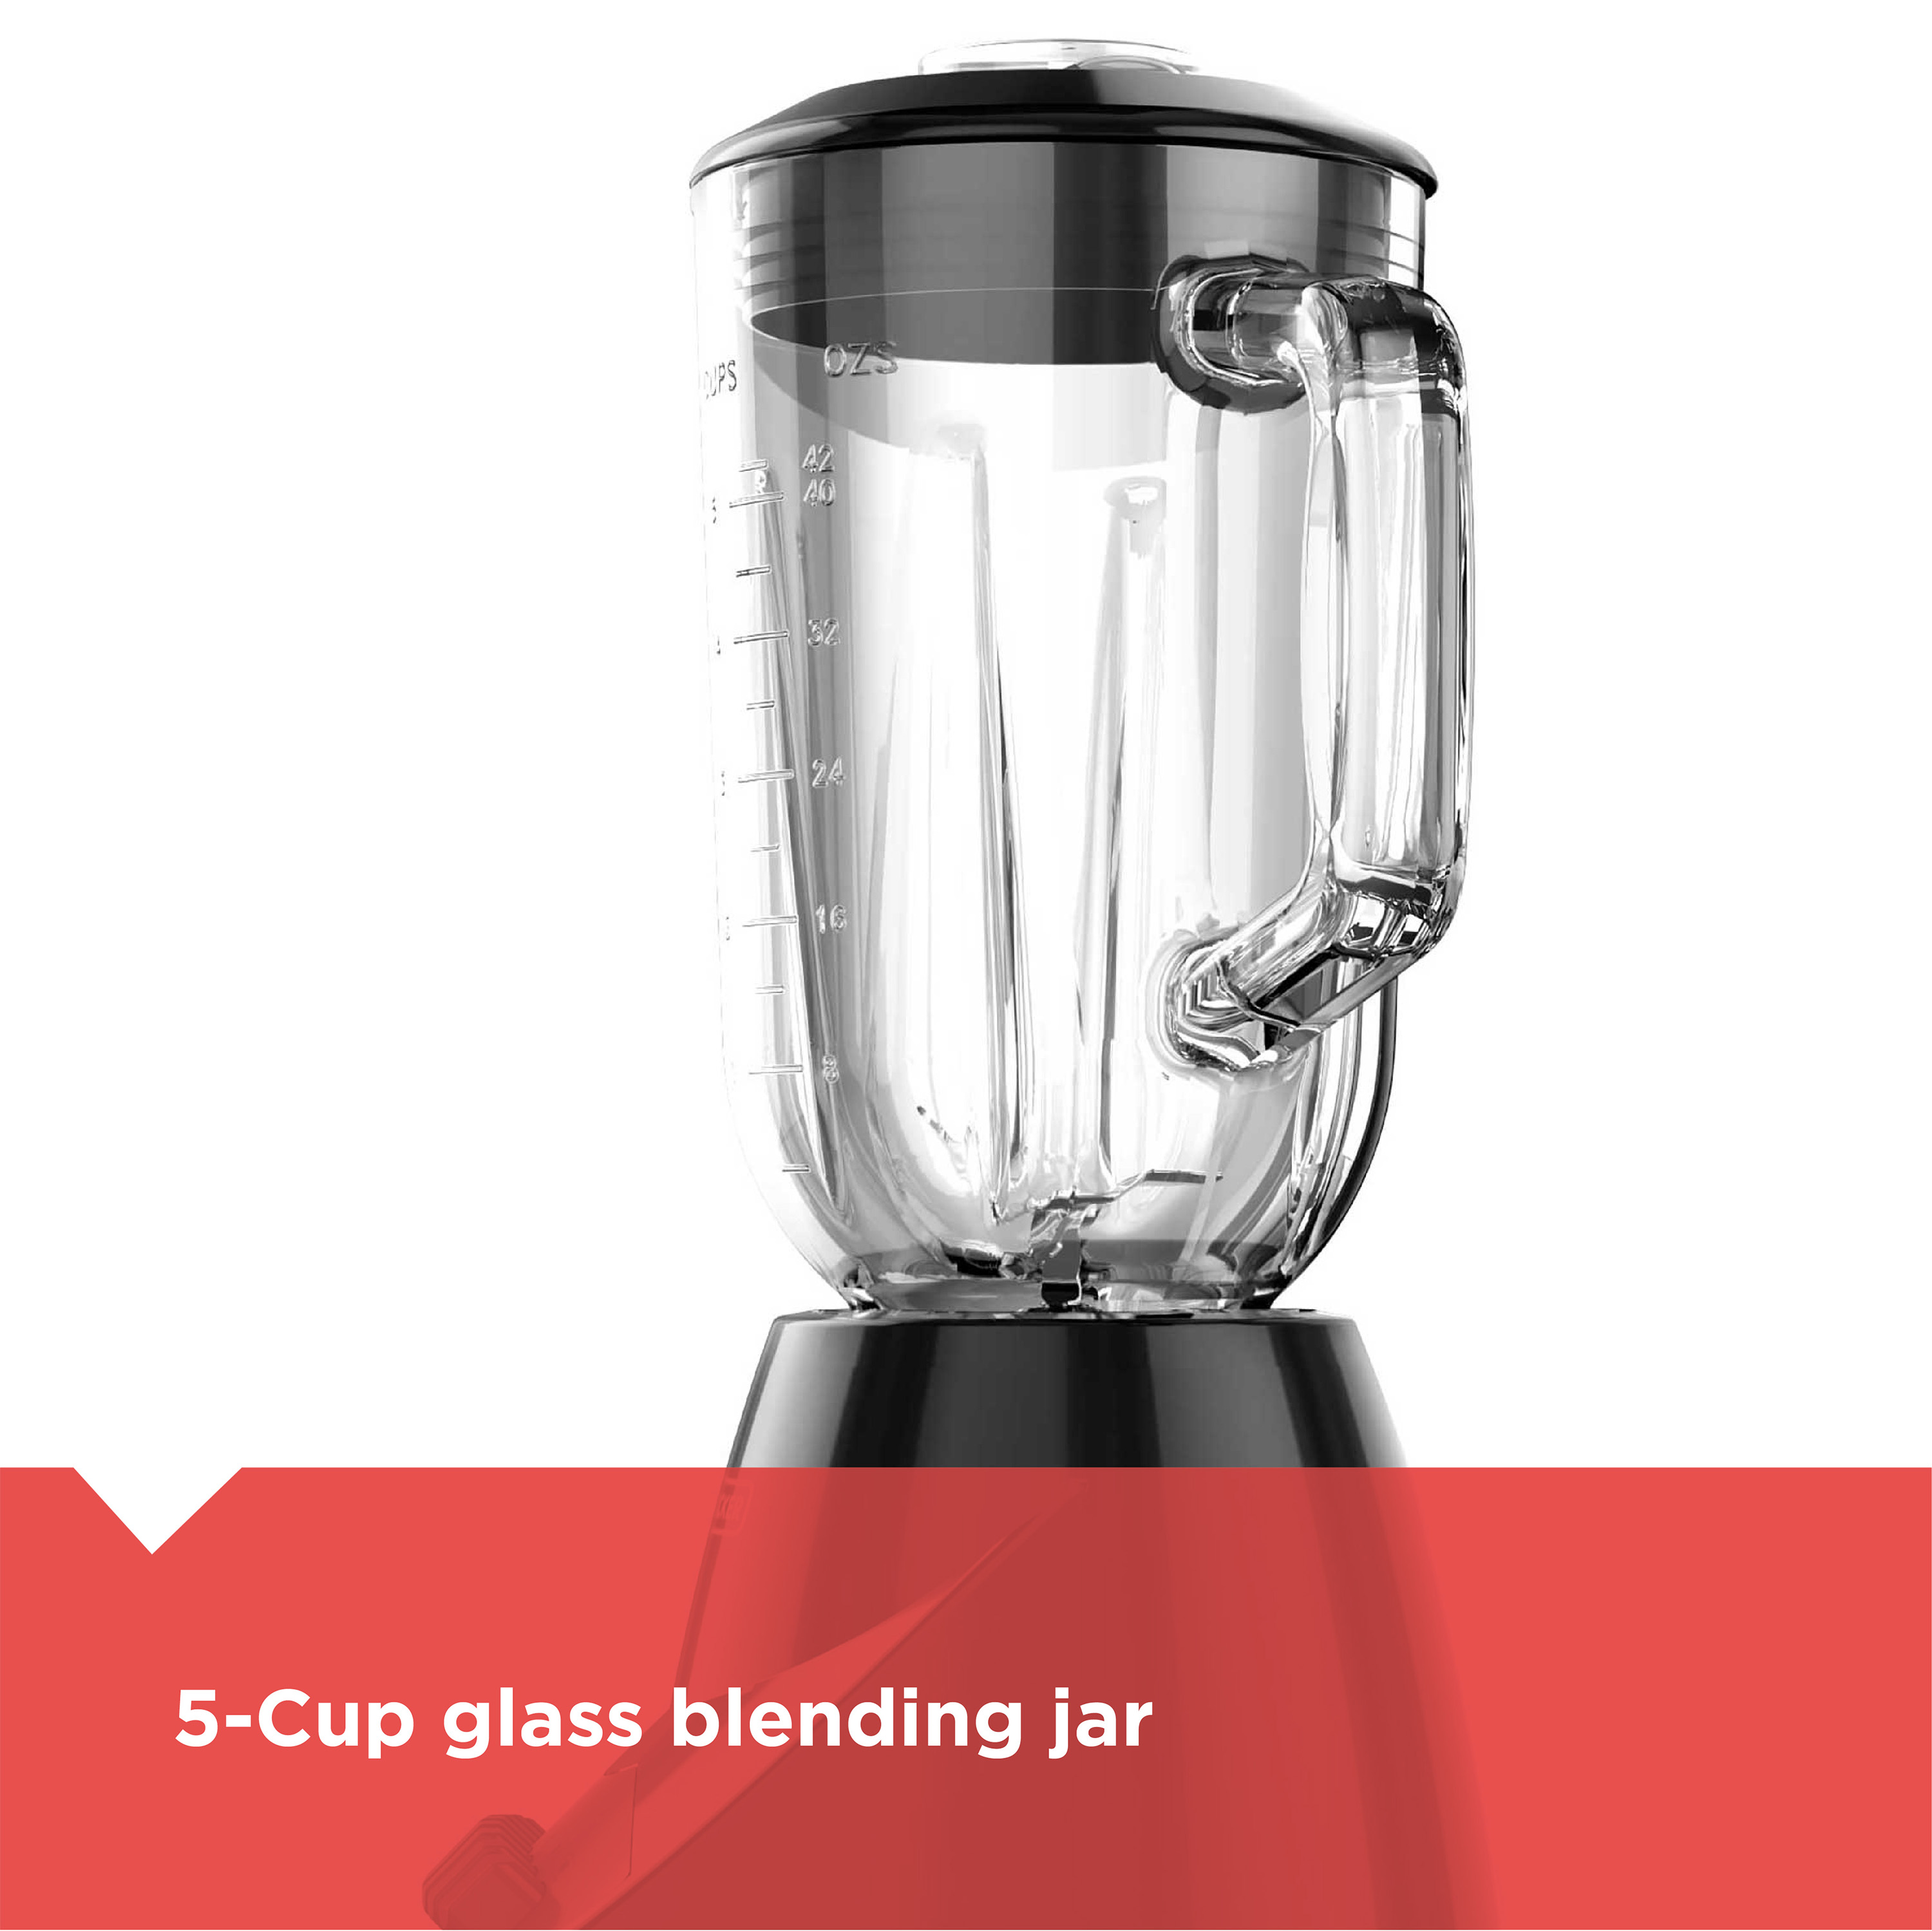 BLACK + DECKER 10-Speed Blender, 550 Watts, 50 Oz (6.25-cup) Glass Blending Jar, Black, BL2010BG - image 3 of 8